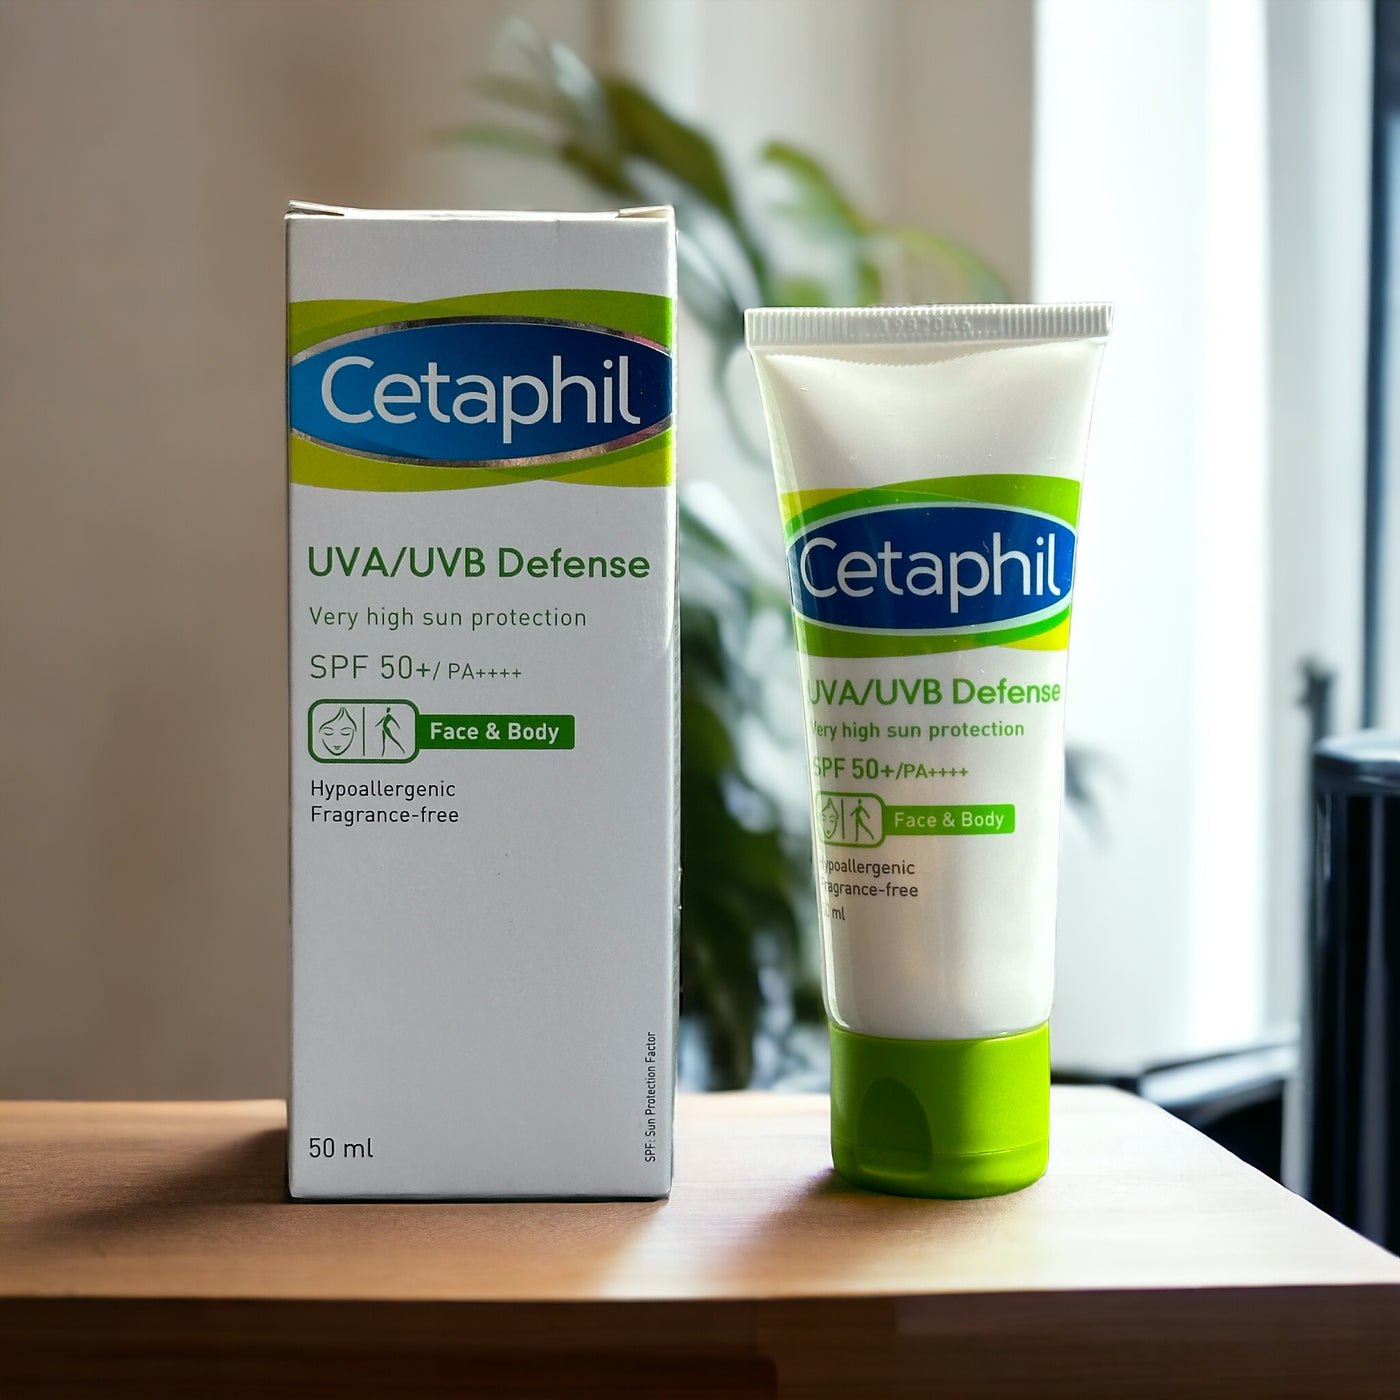 Cetaphil UVA/UVB Defense Sunscreen